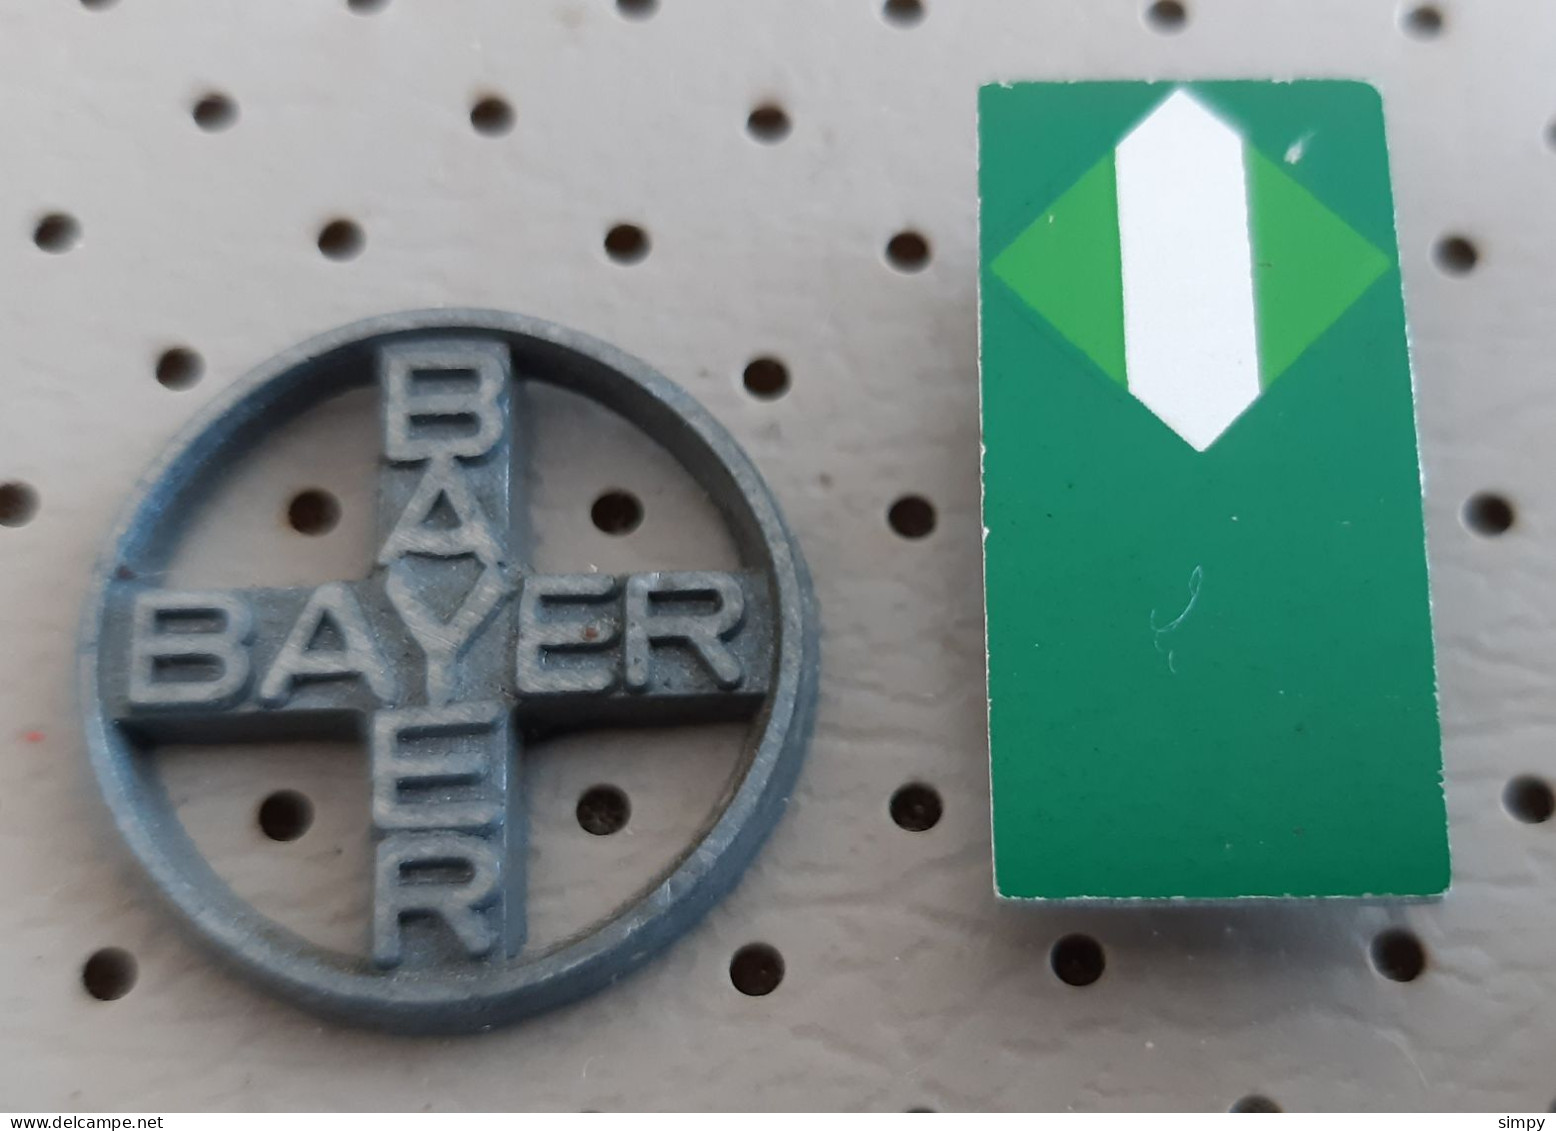 BAYER Pharmacy Medical Slovenia Ex Yugoslavia Vintage Pins - Medical